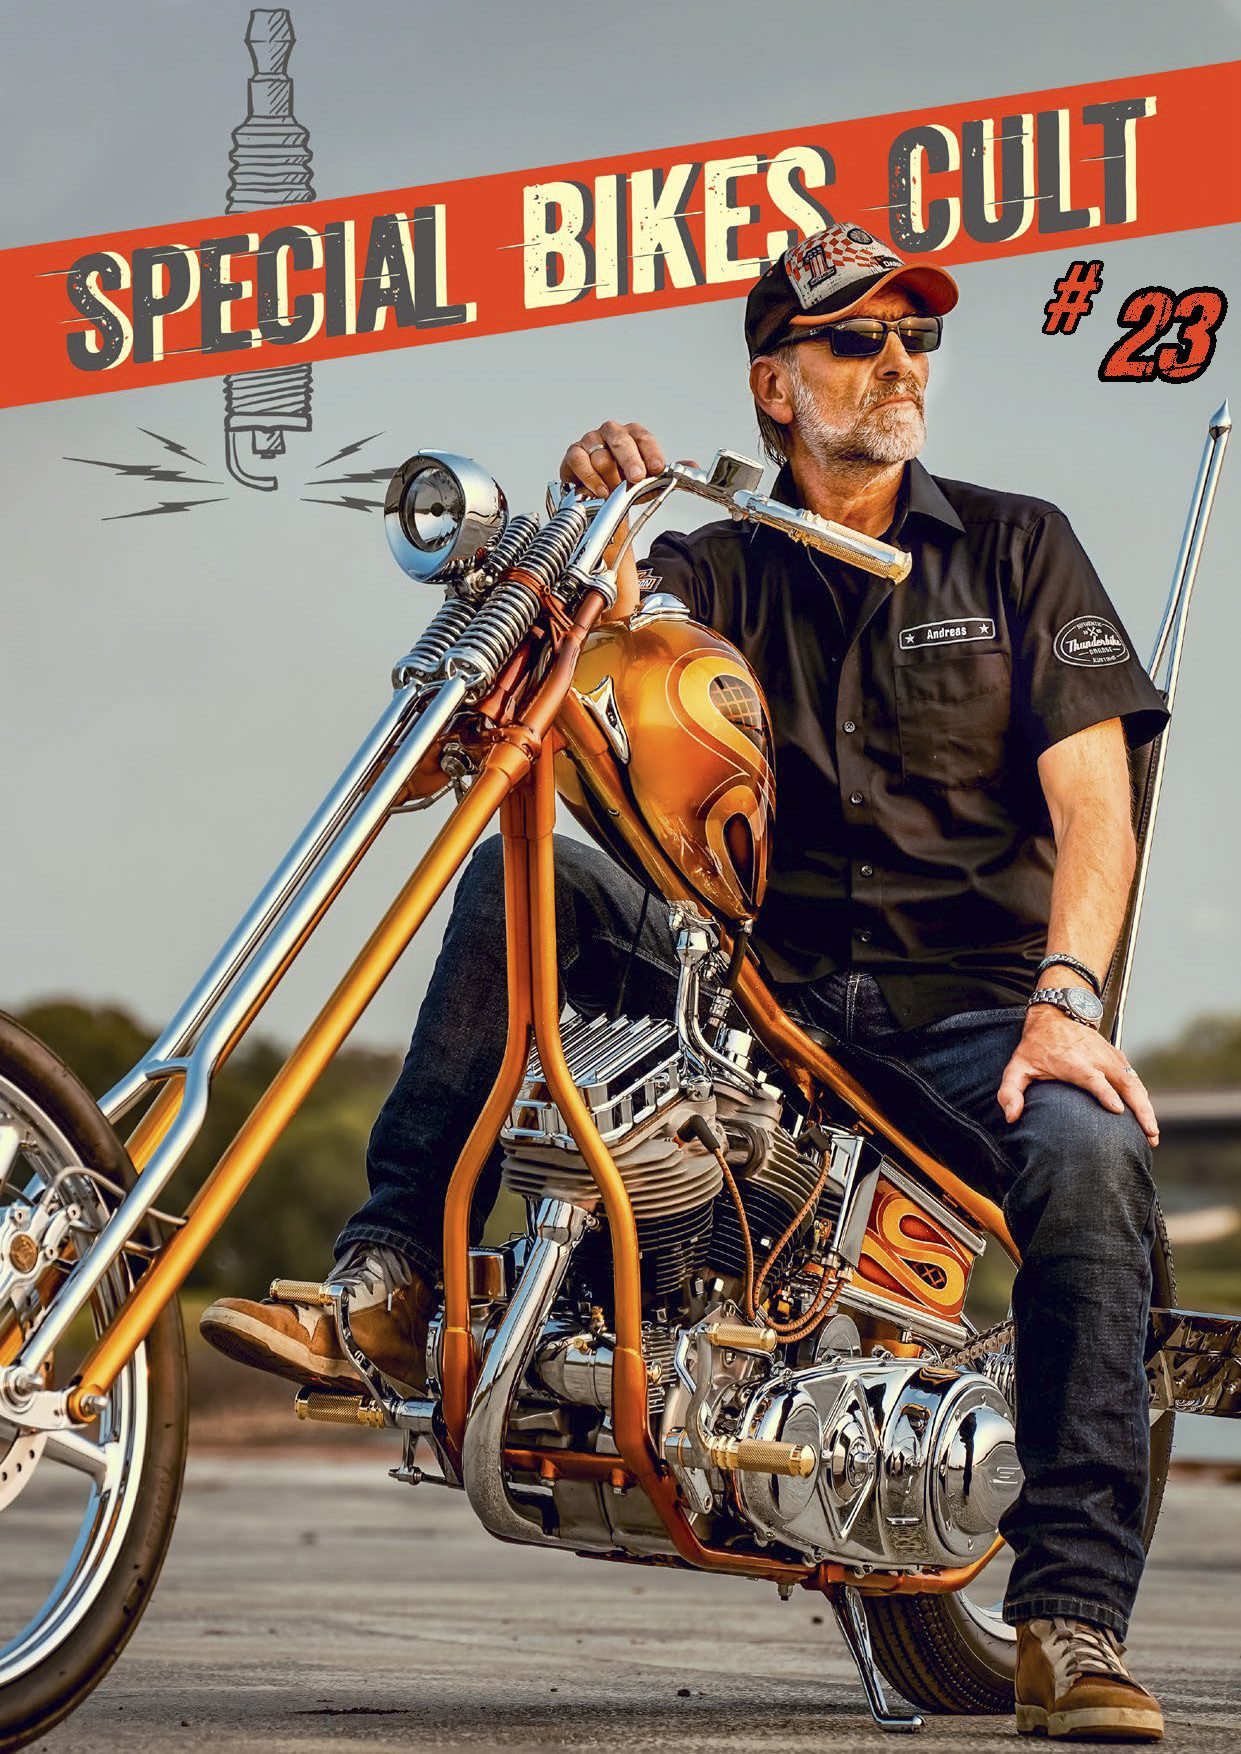 Special Bikes Cult #23